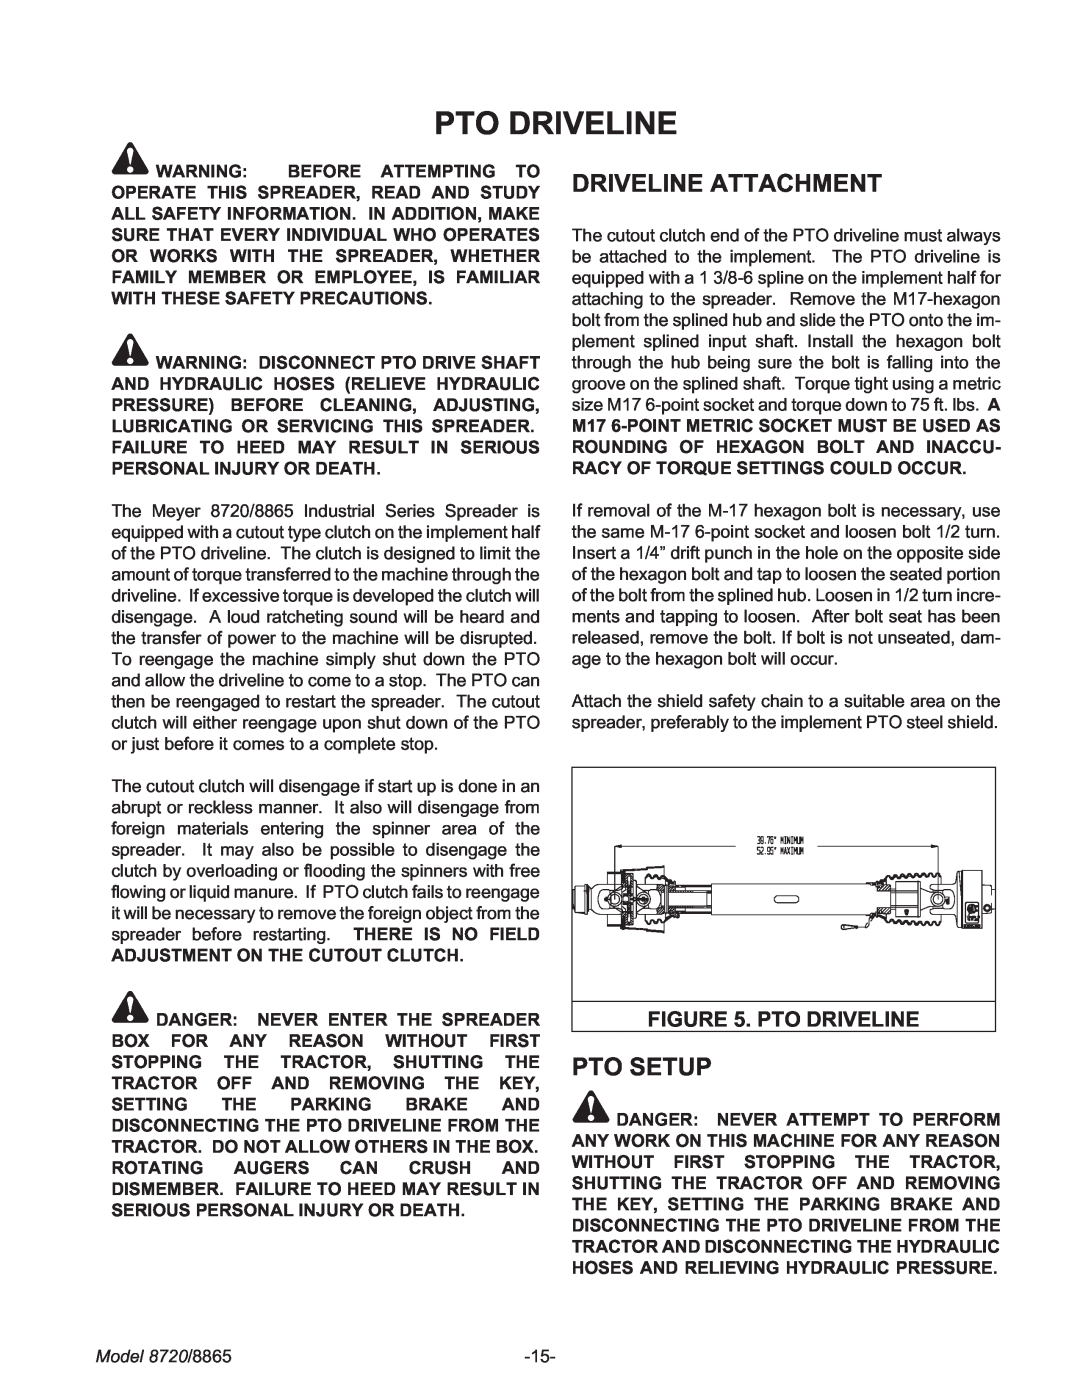 Meyer manual Pto Driveline, Driveline Attachment, Pto Setup, Model 8720/8865 